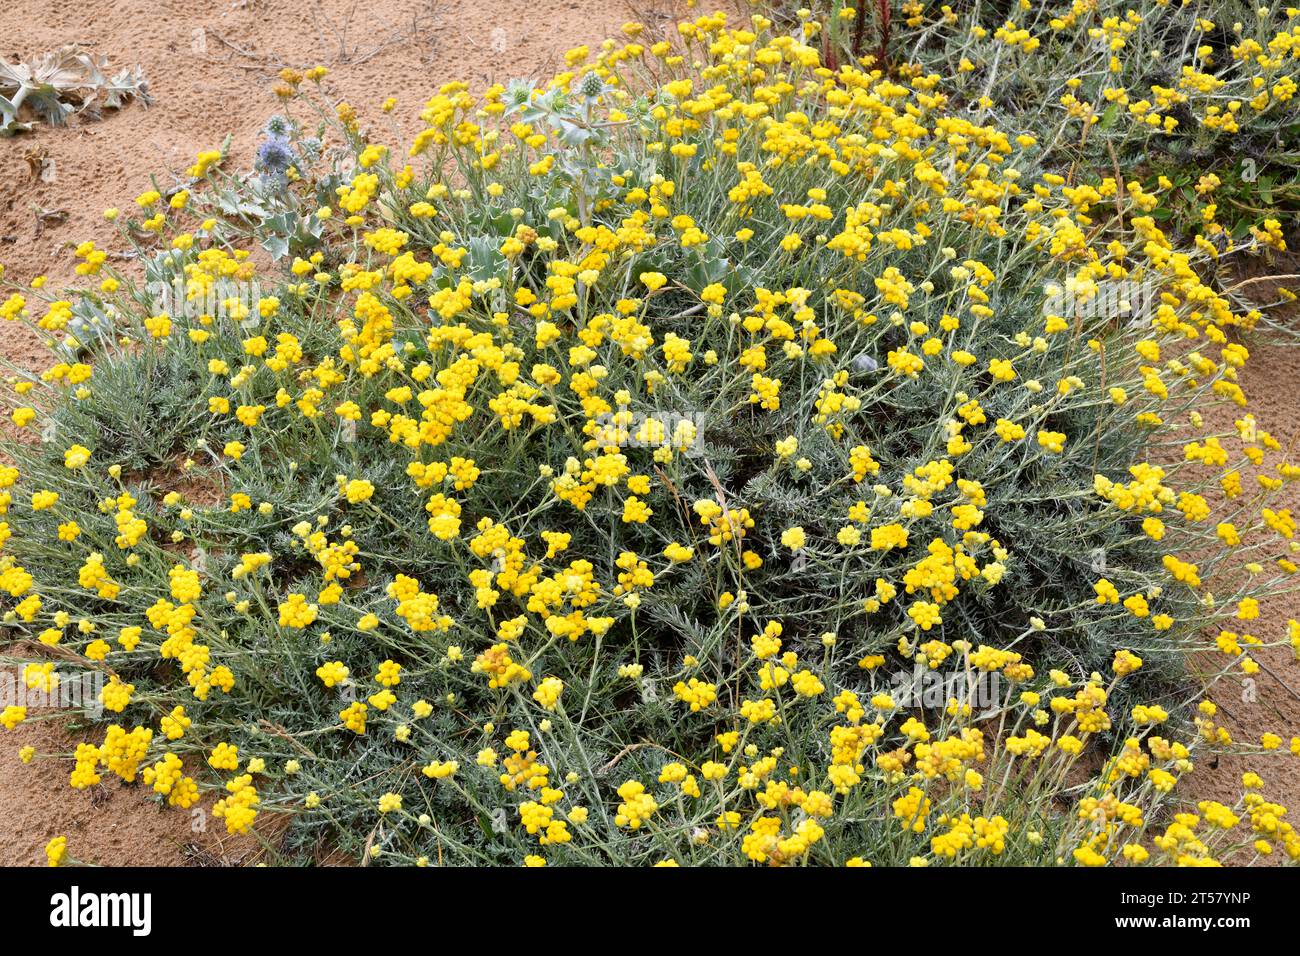 Mediterranean strawflower (Helichrysum stoechas) is an annual or perennial plant native to sandy coasts of Mediterranean Basin. This photo was taken i Stock Photo